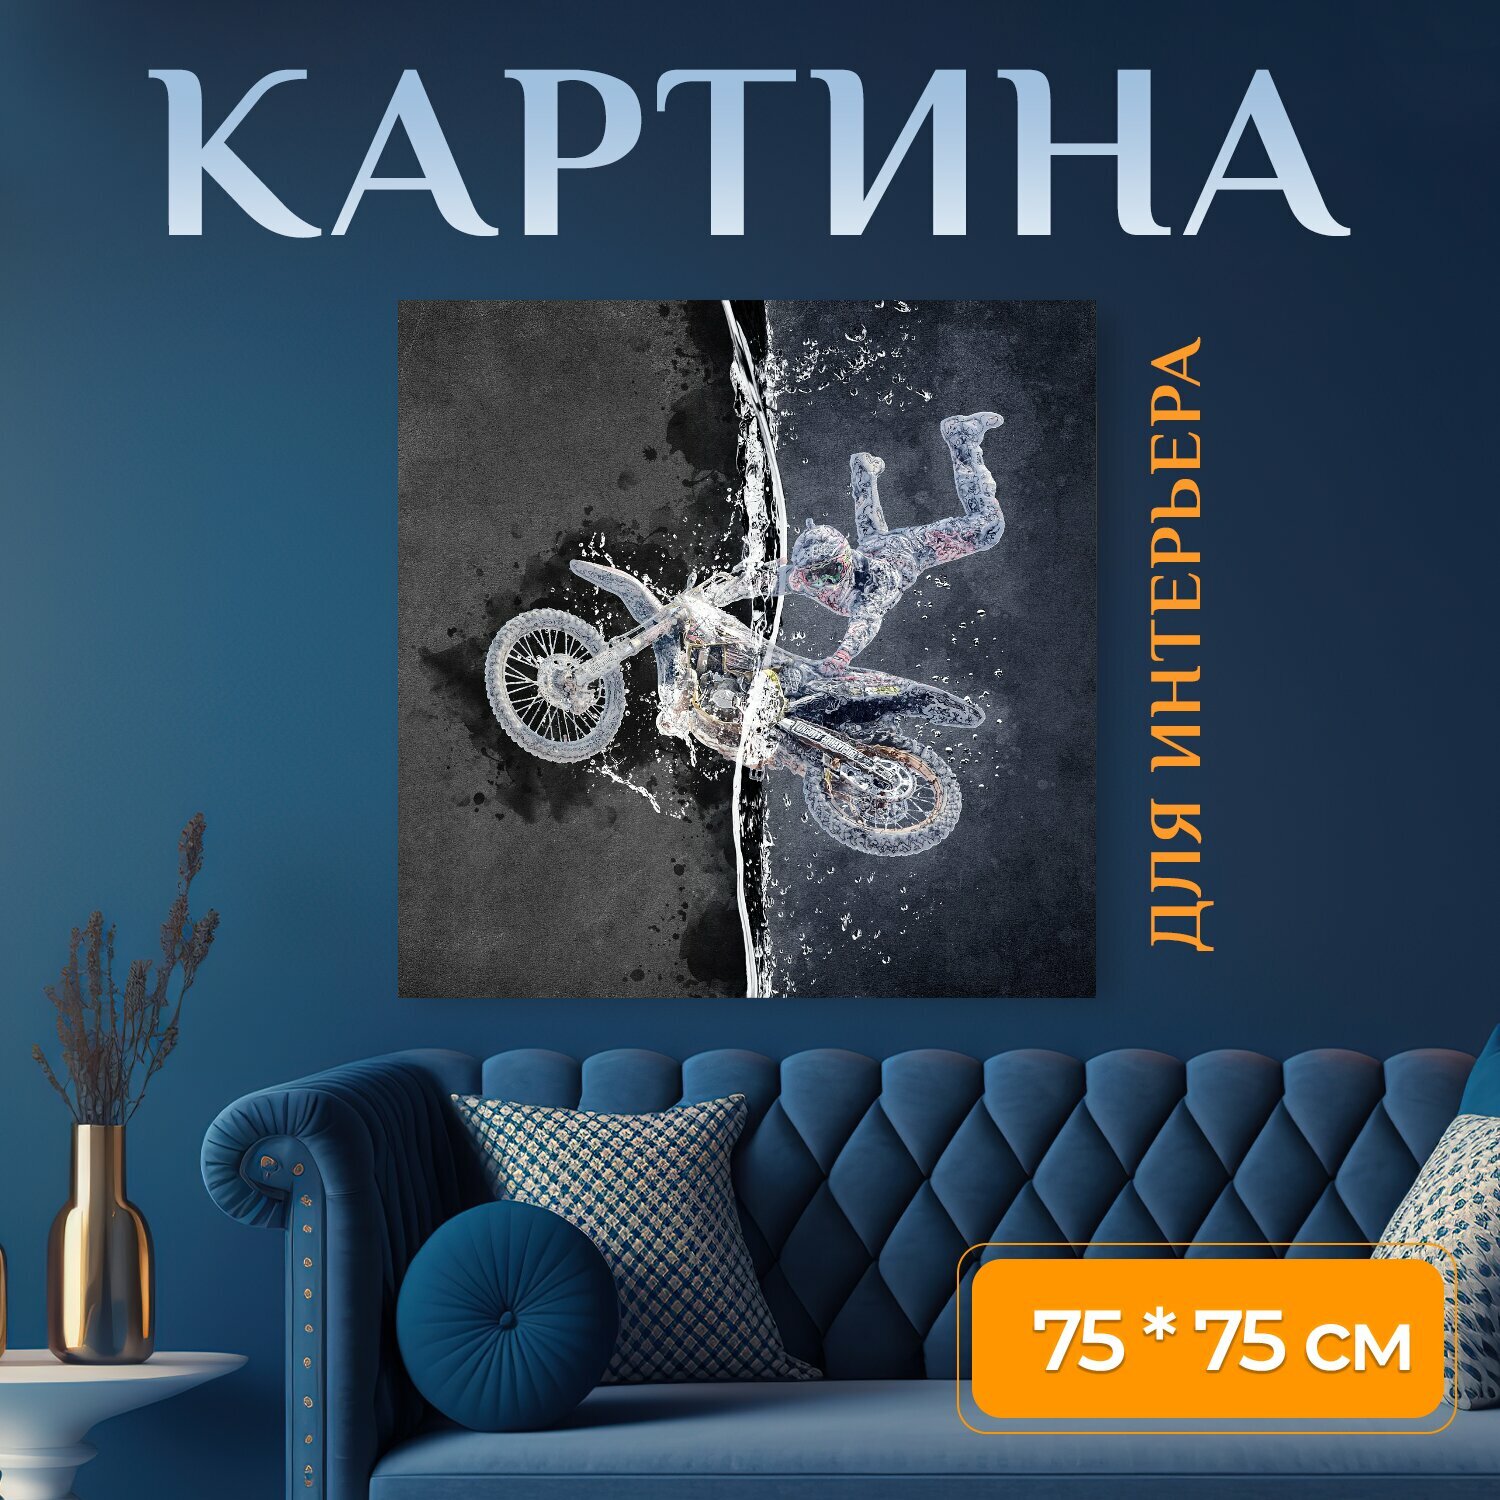 Картина на холсте "Мотокросс, велосипед грязи, мотоцикл" на подрамнике 75х75 см. для интерьера